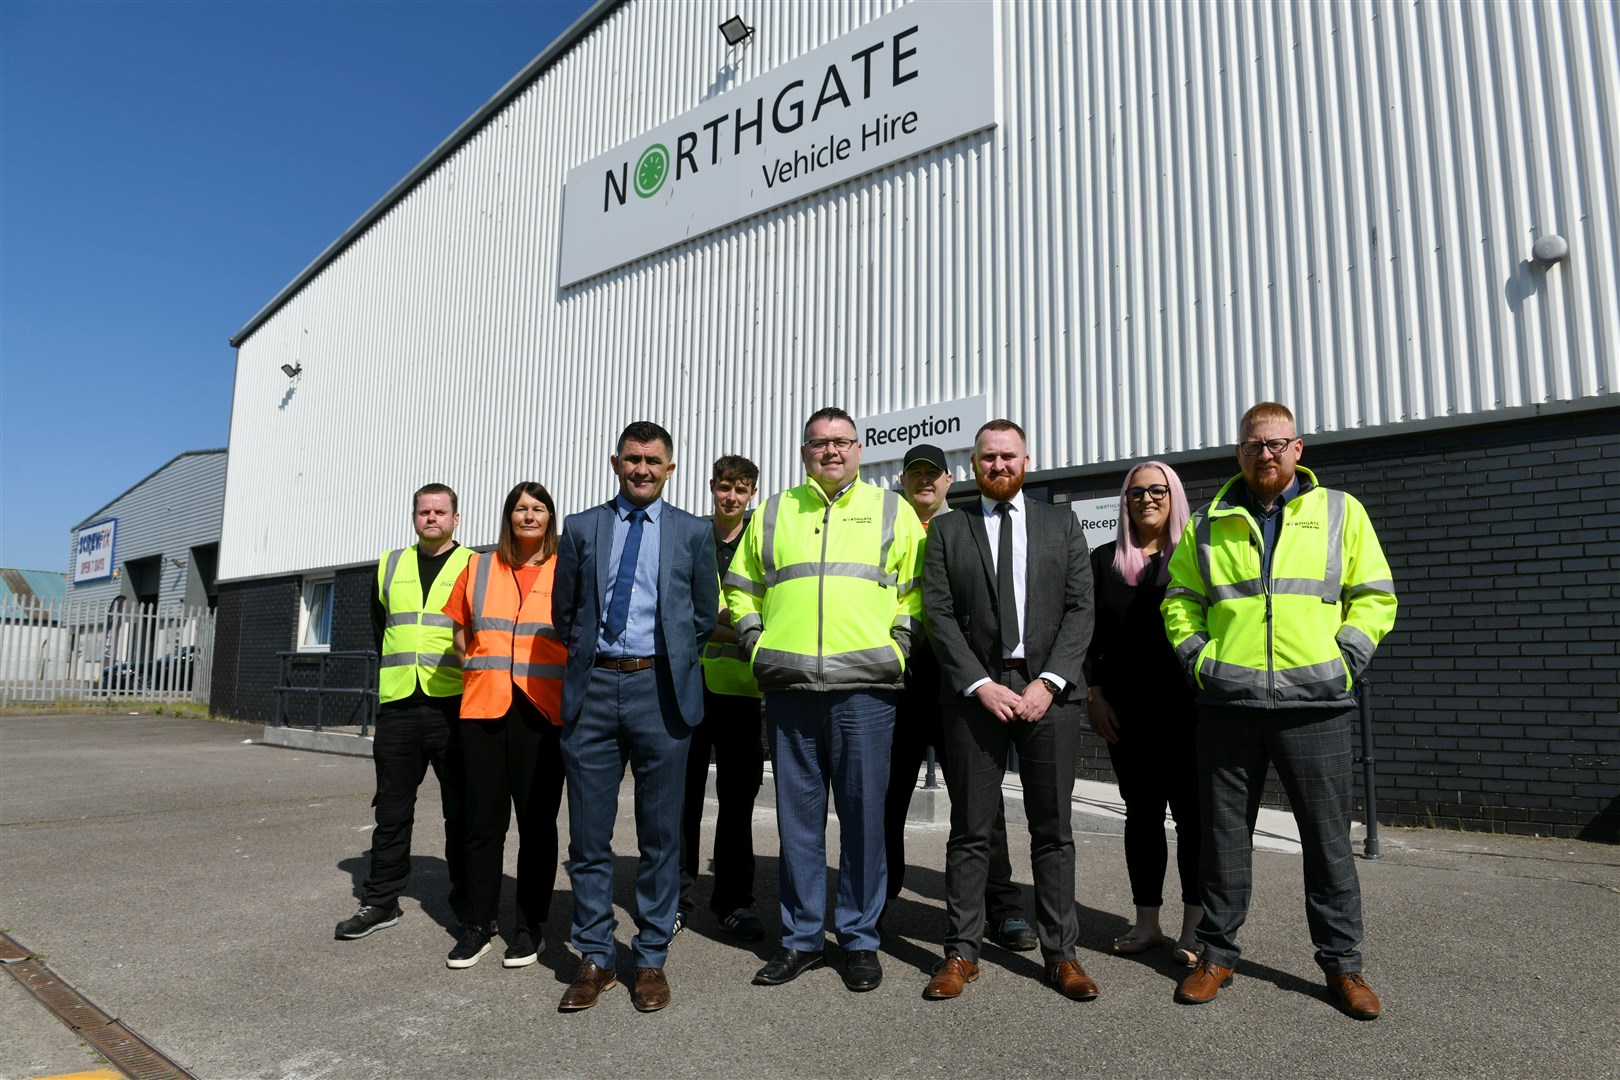 Northgate Vehicle Hire team in Inverness. Picture: Callum Mackay.